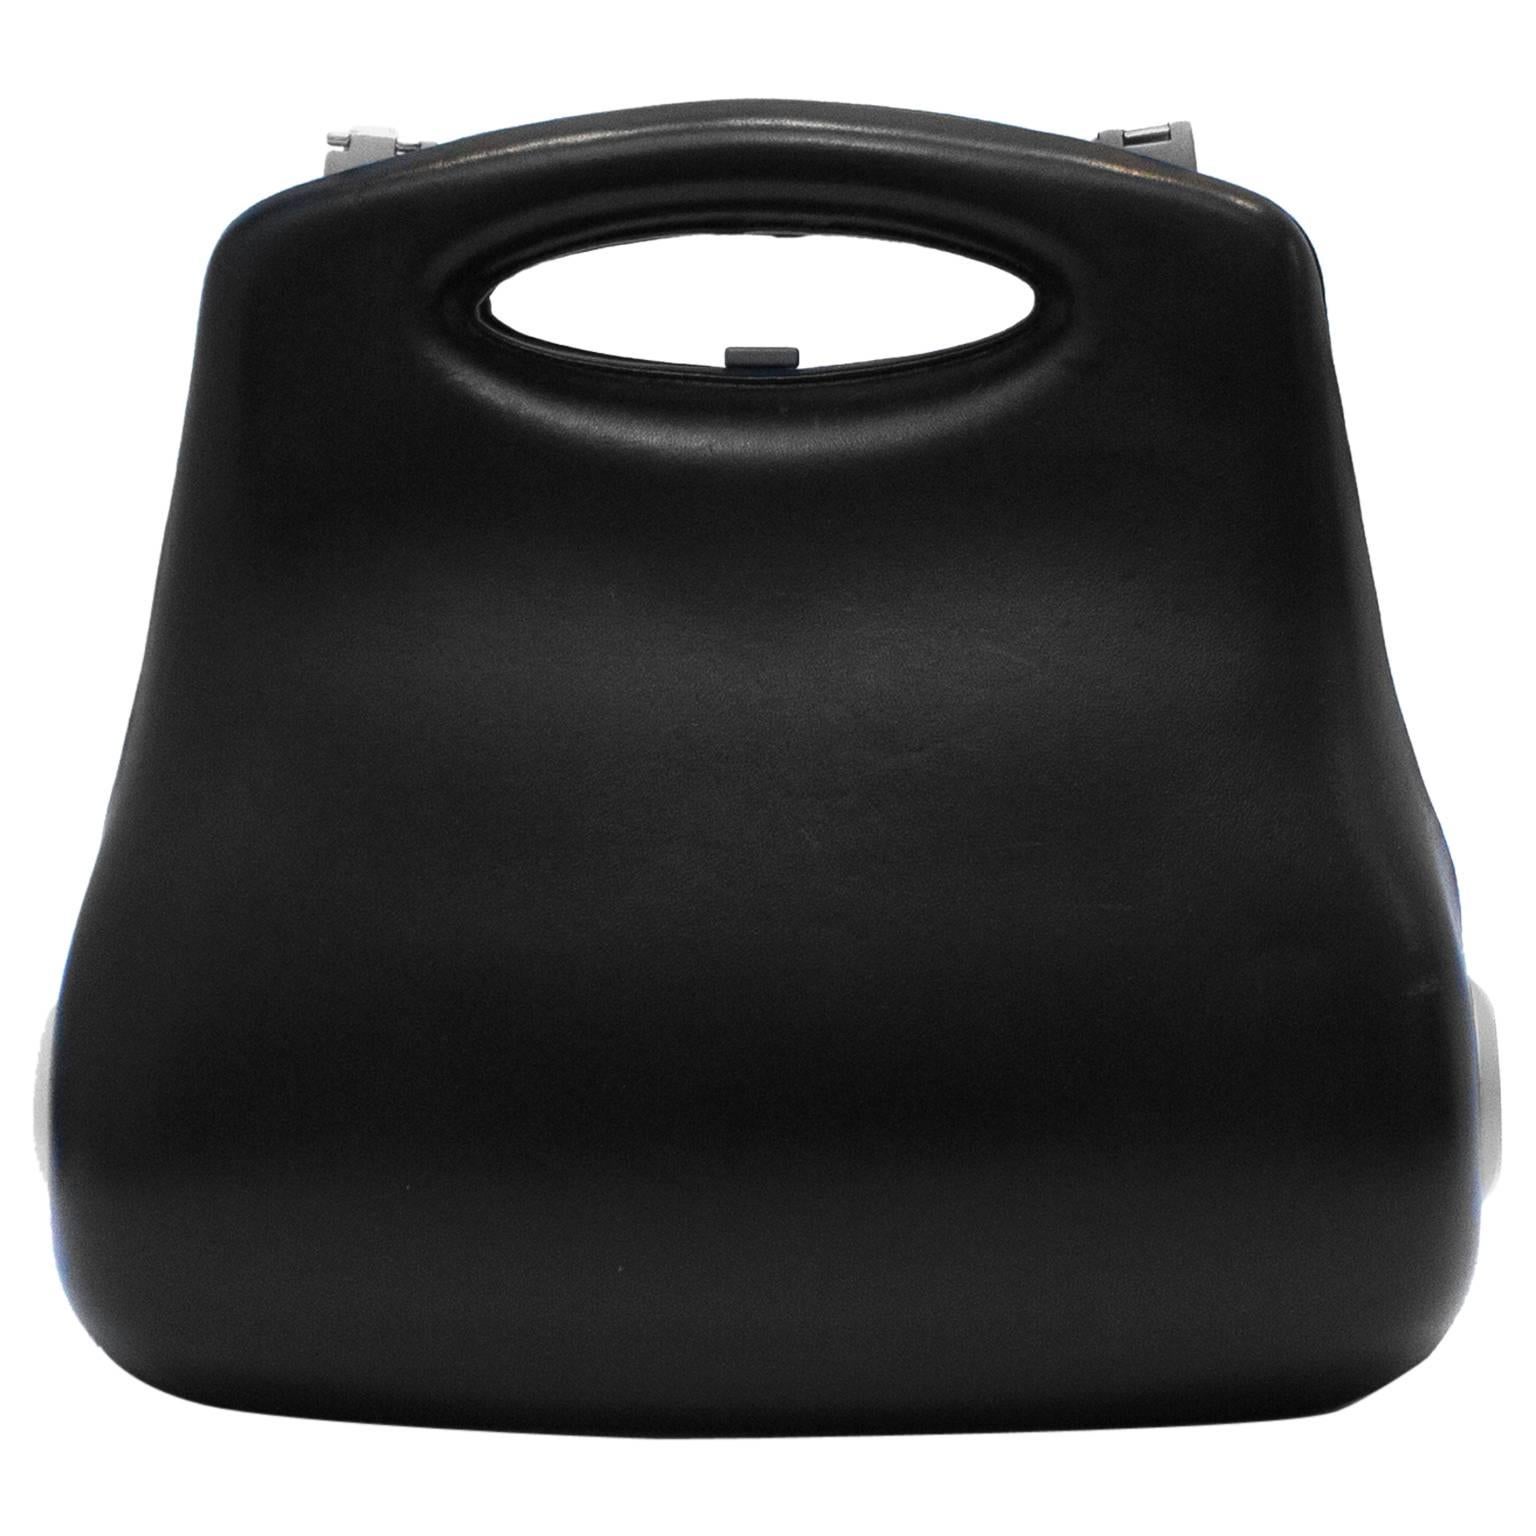 2005 Chanel Premier Edition Futuristic Hard Shell Handbag 